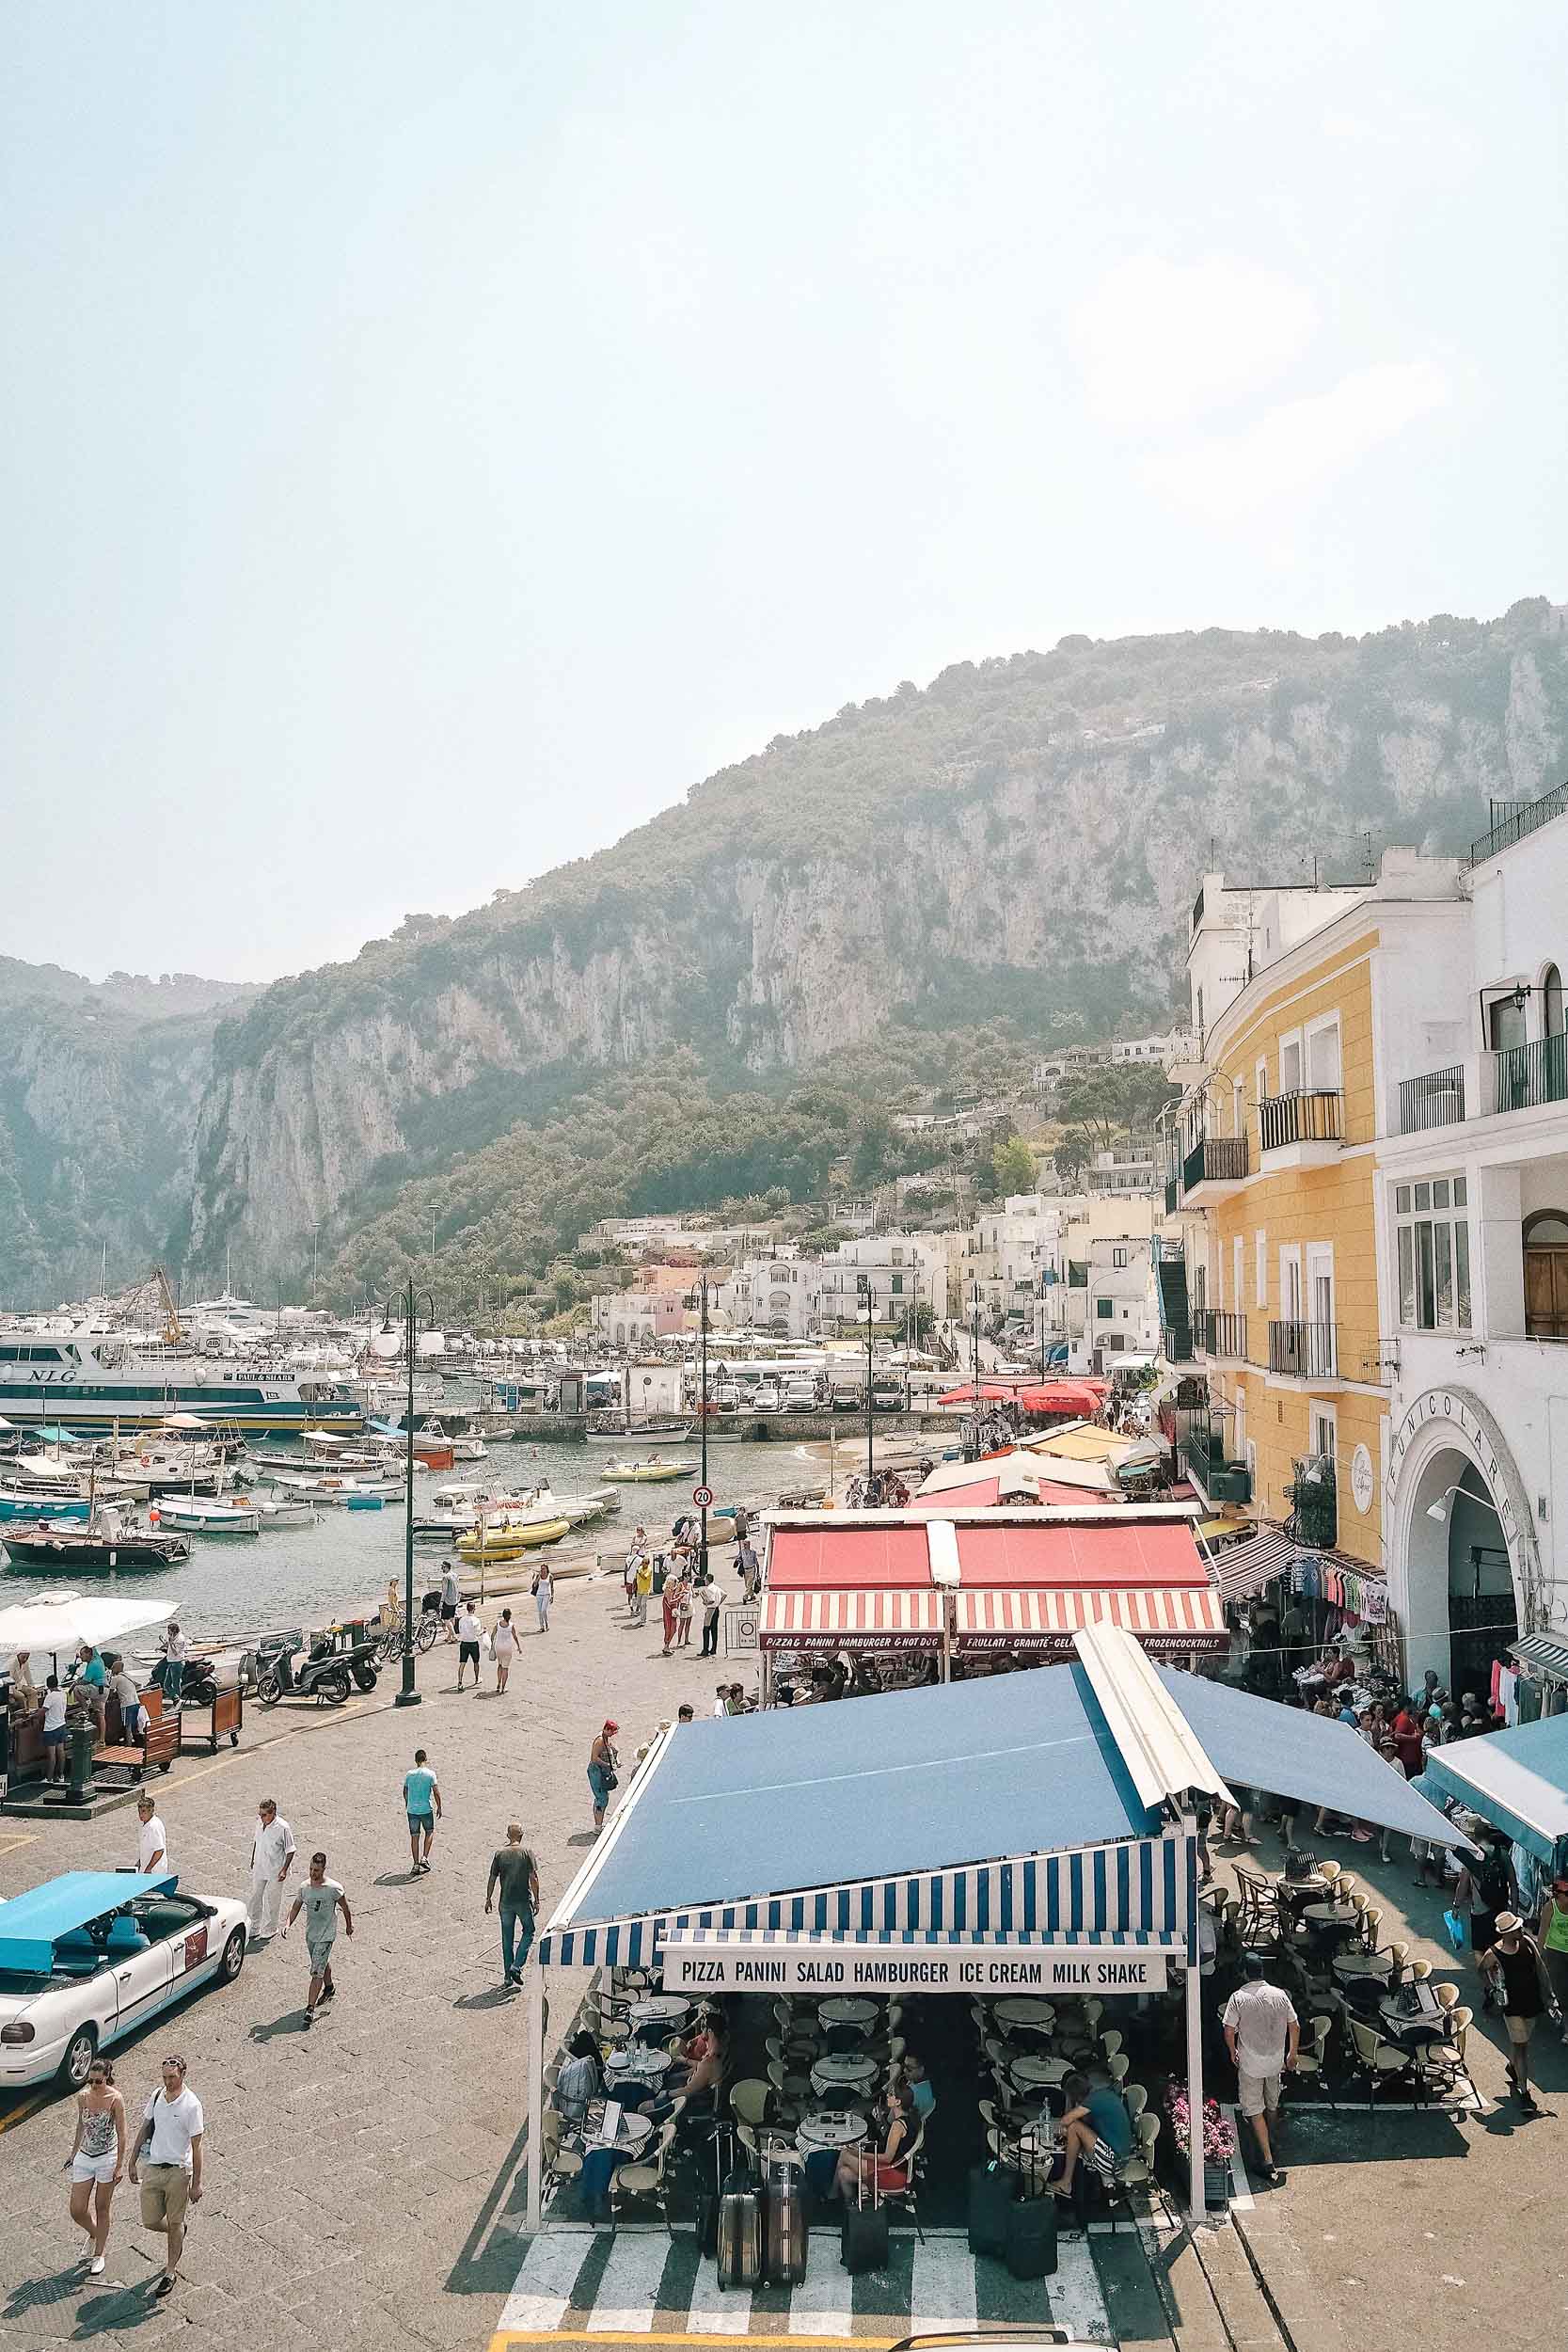 The island of Capri, Italy